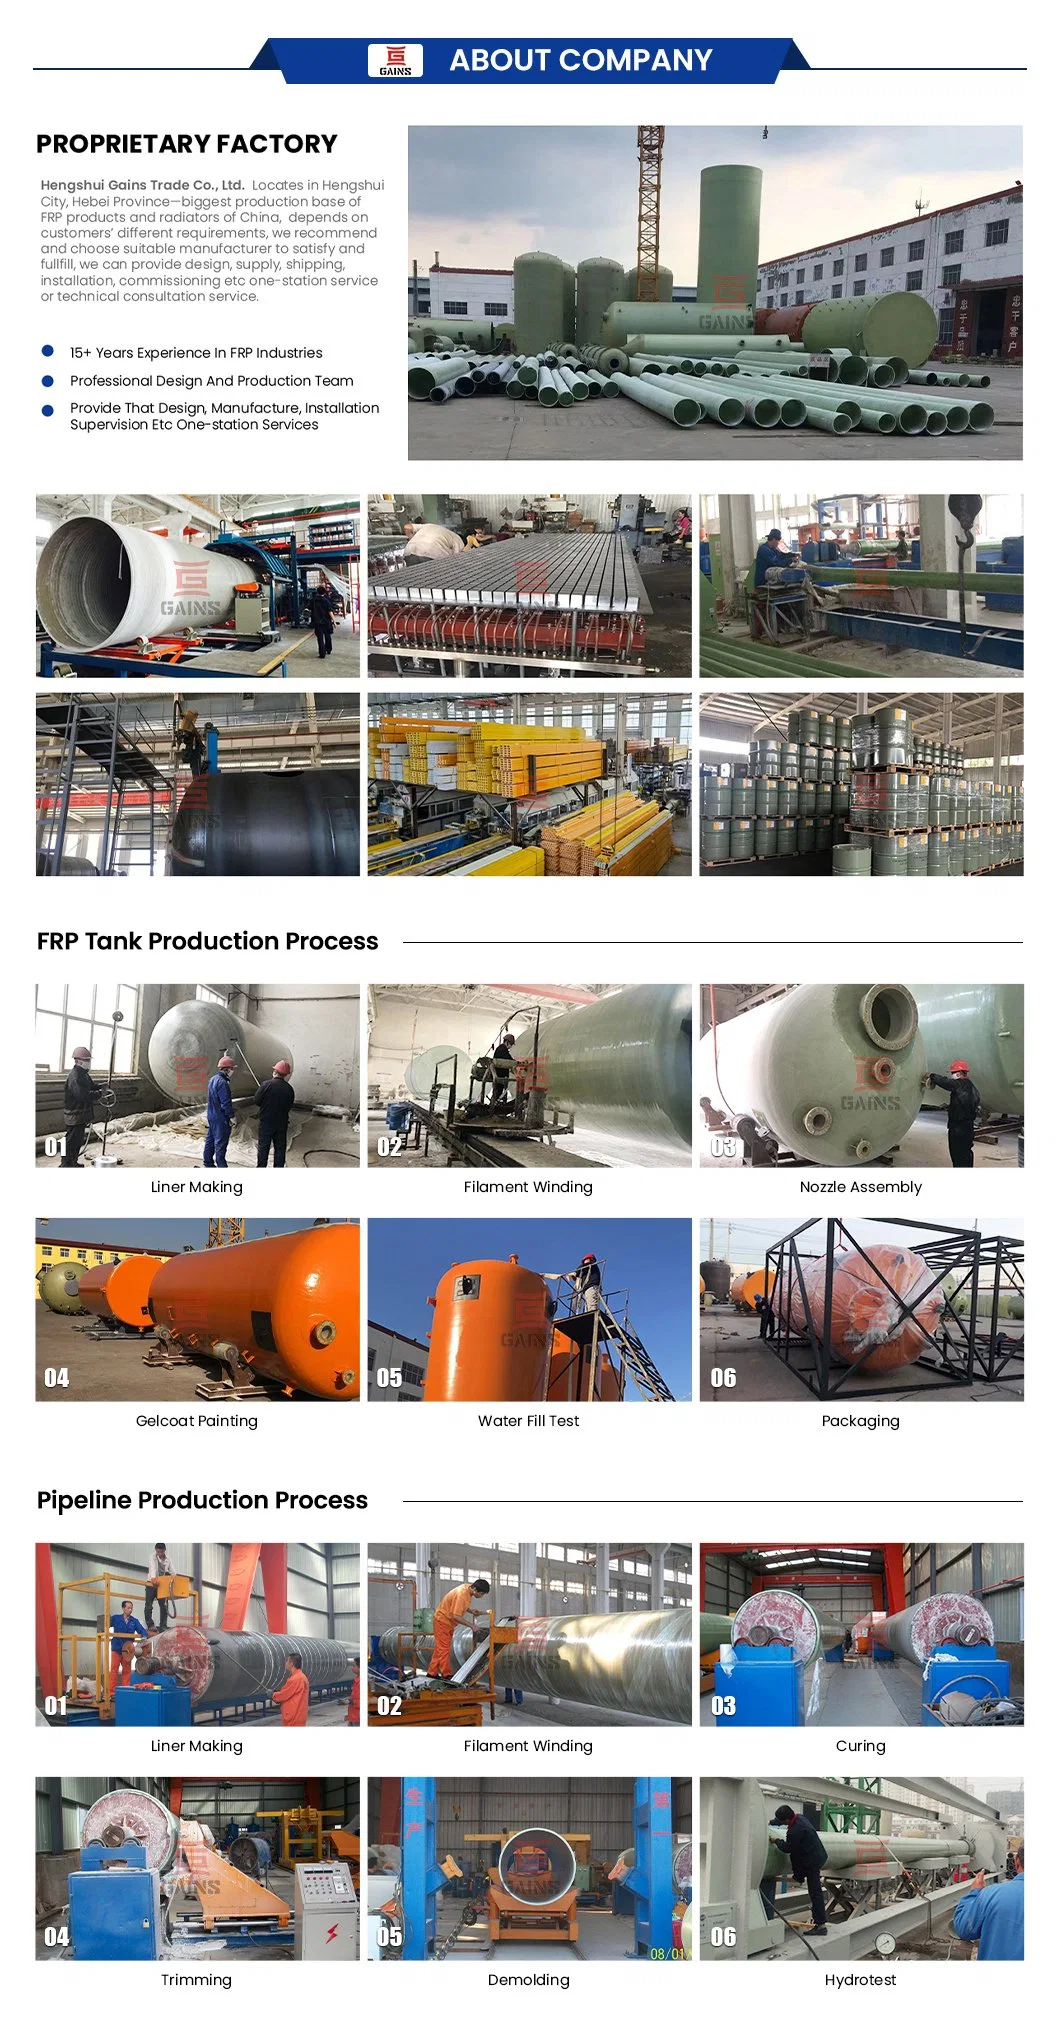 Gains Fiberglass Sodium Chloride Storage Tanks Fabricators FRP Chlorine Holding Tank China FRP Nitric Acid Storage Tanks